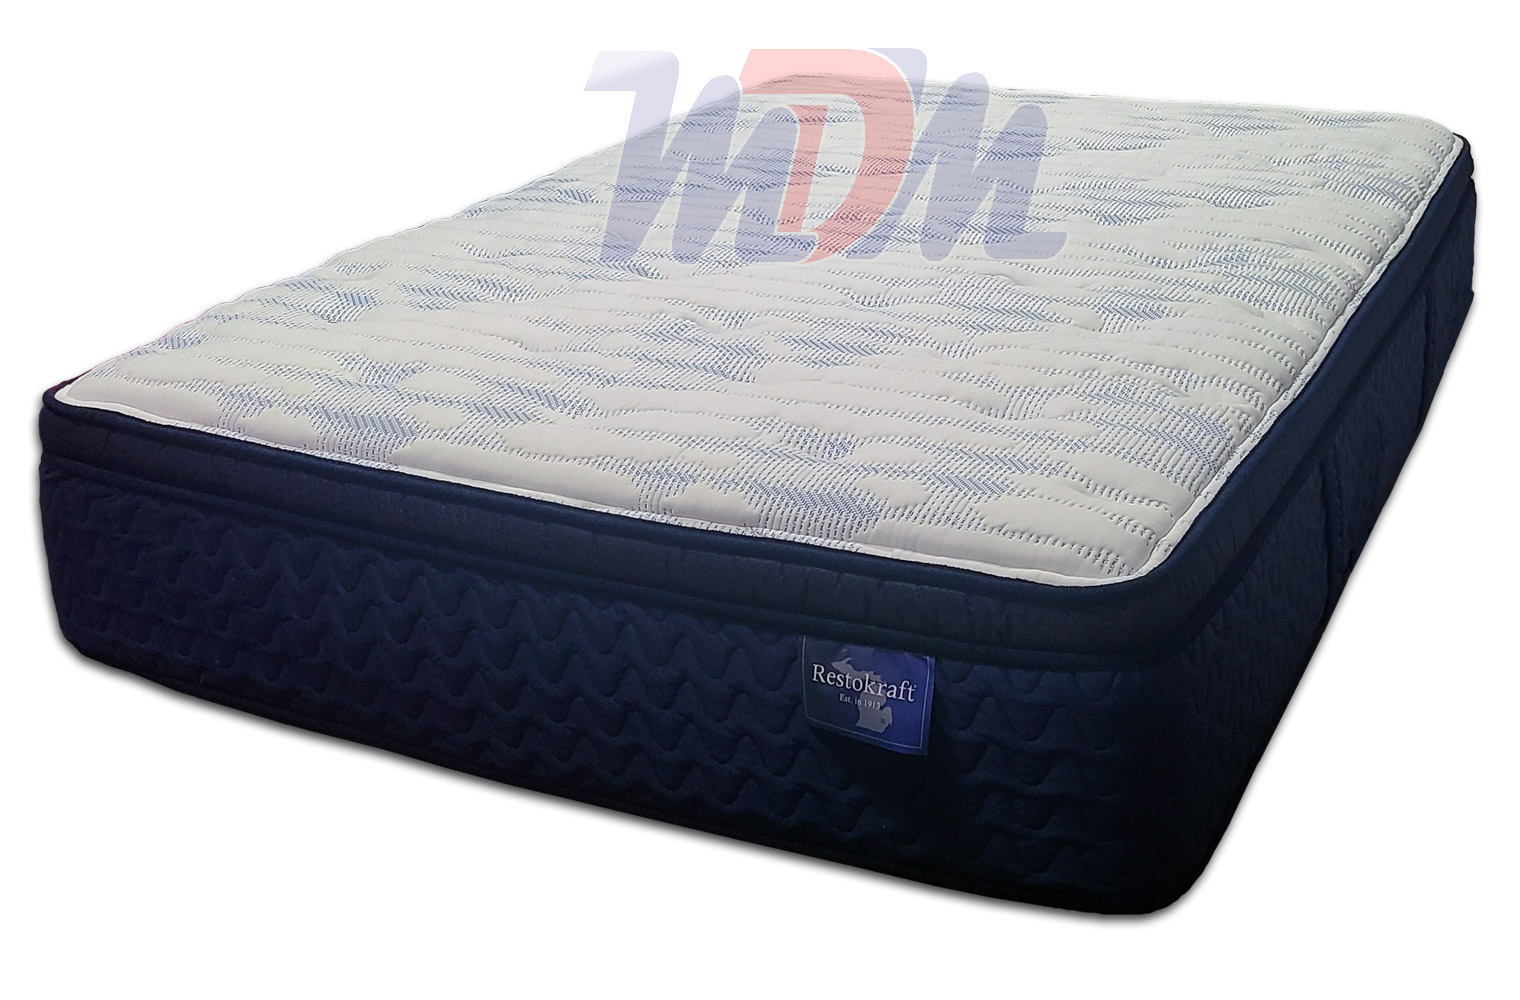 Serta Restokraft Euro mattress with Latex layer